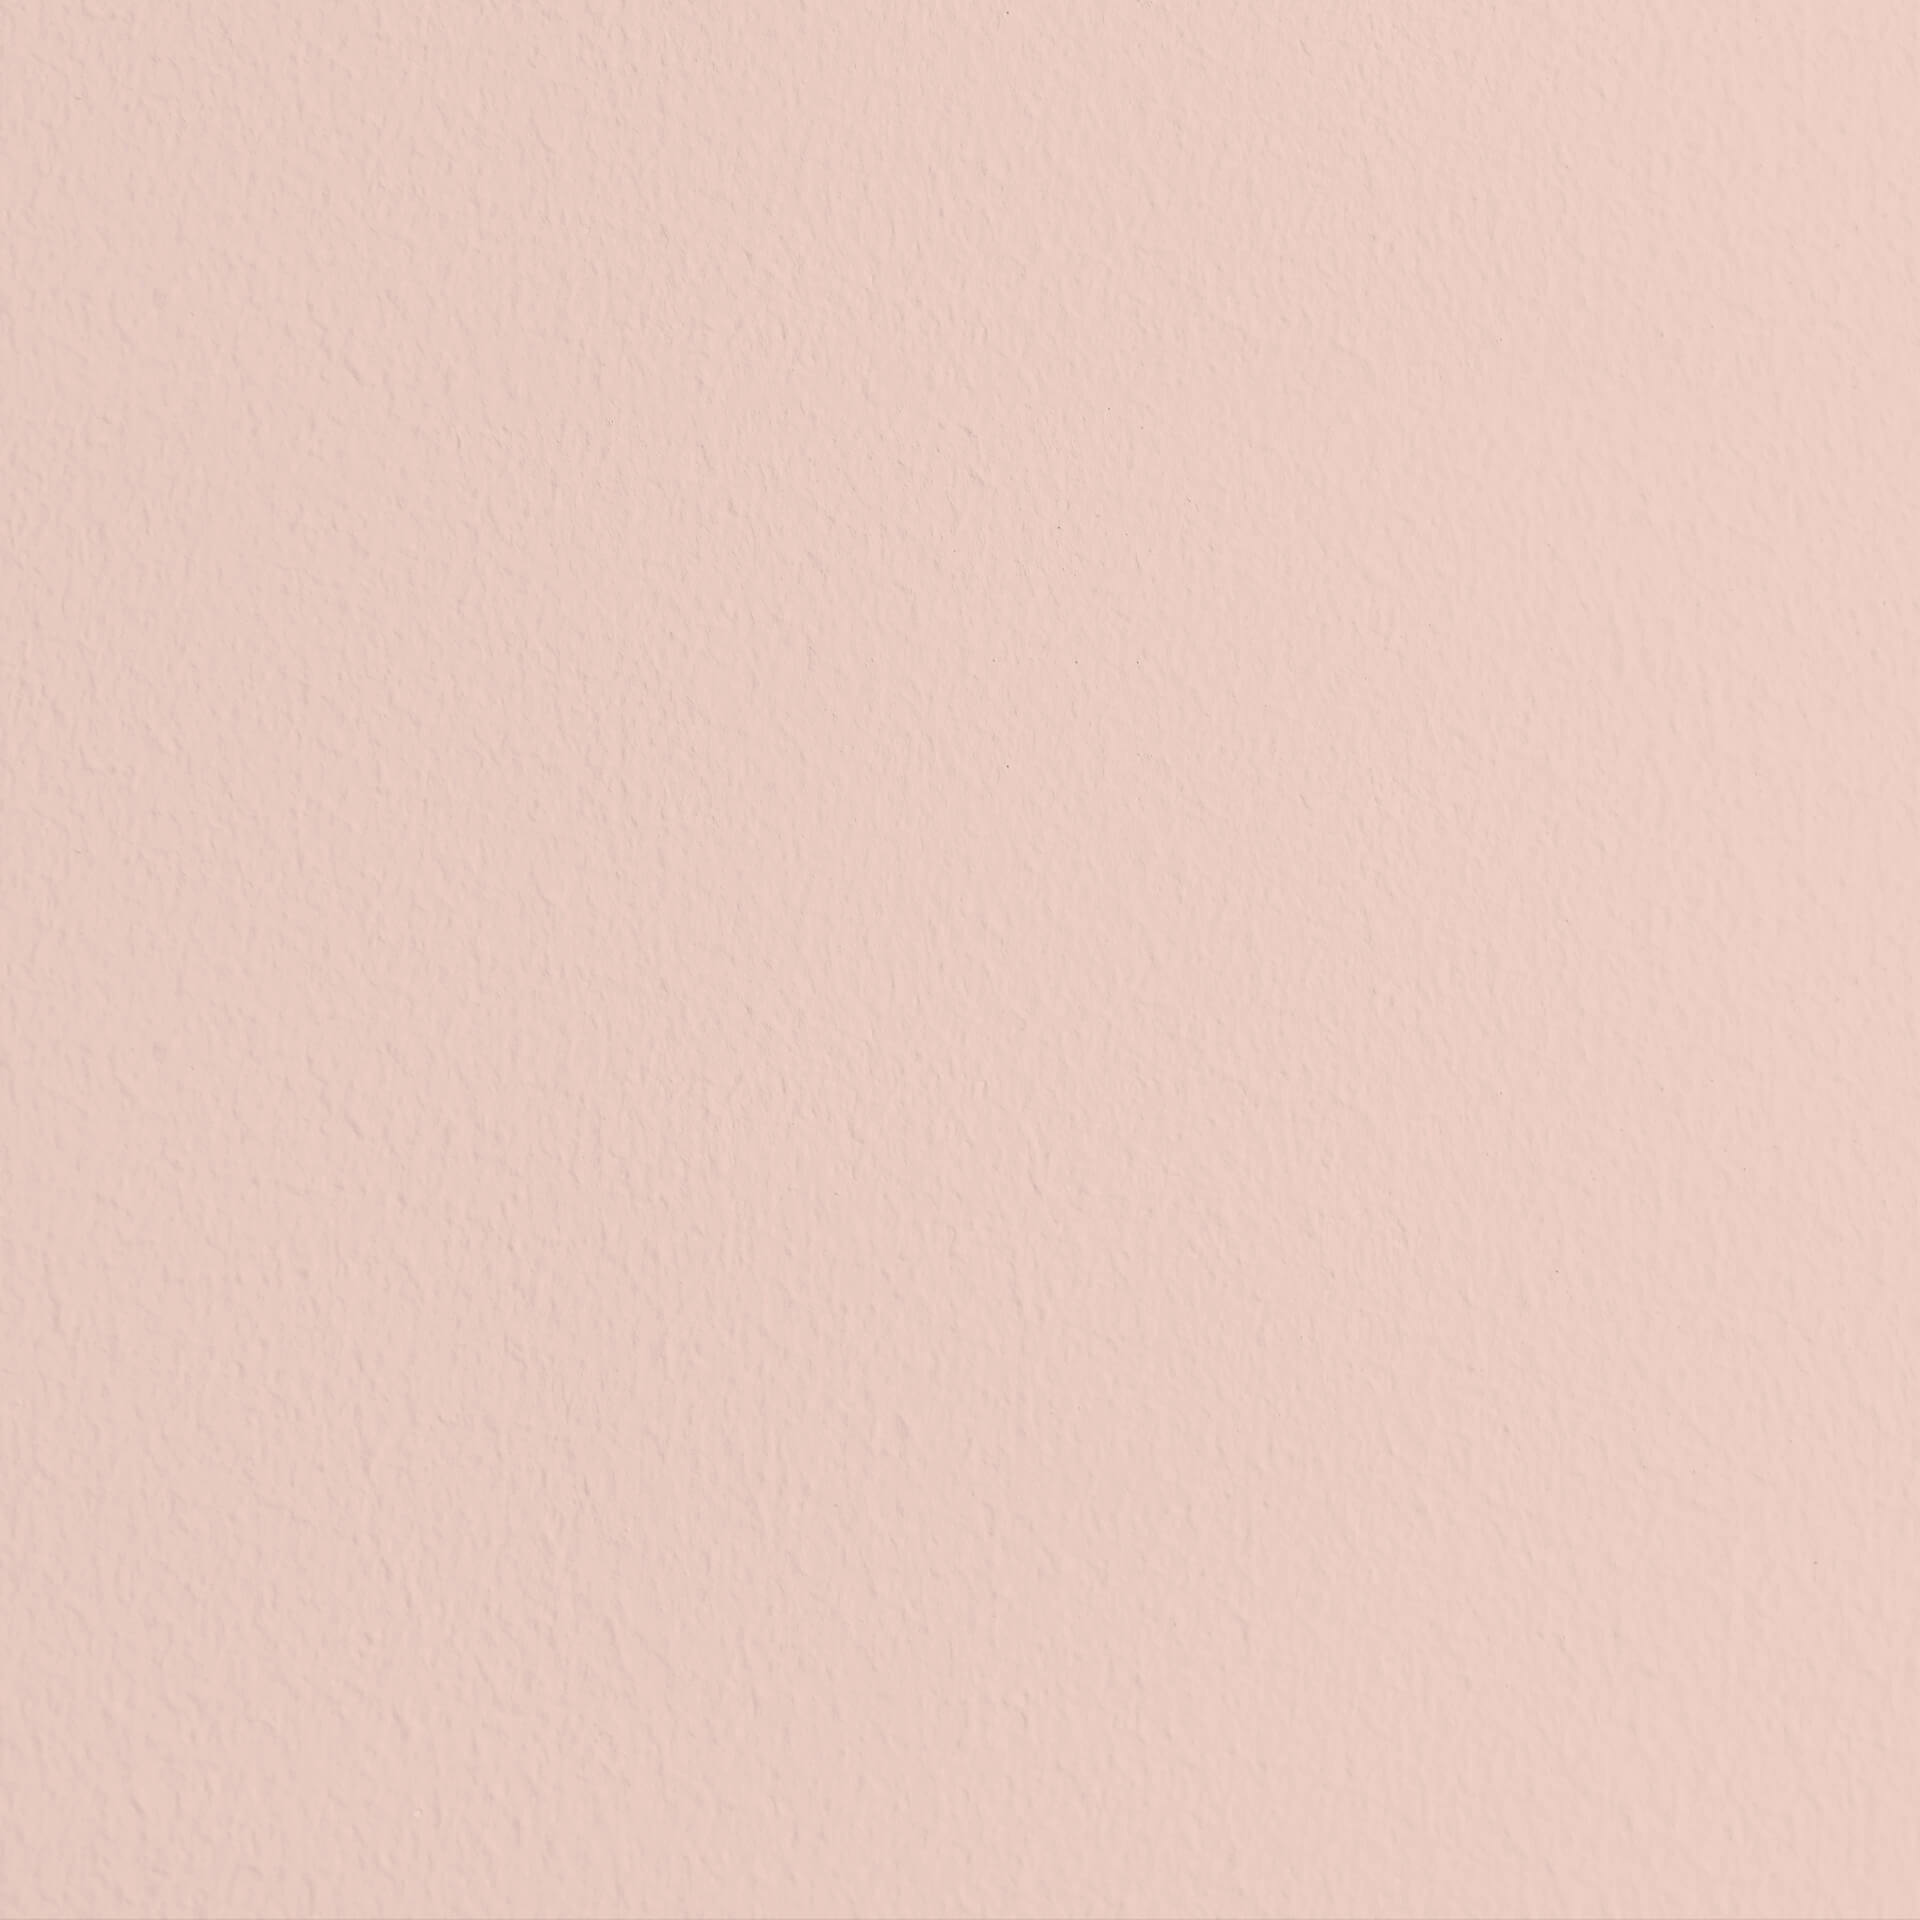 Mylands Gentleman's Pink No. 221 - Marble Matt Emulsion / Wandfarbe, 2.5L